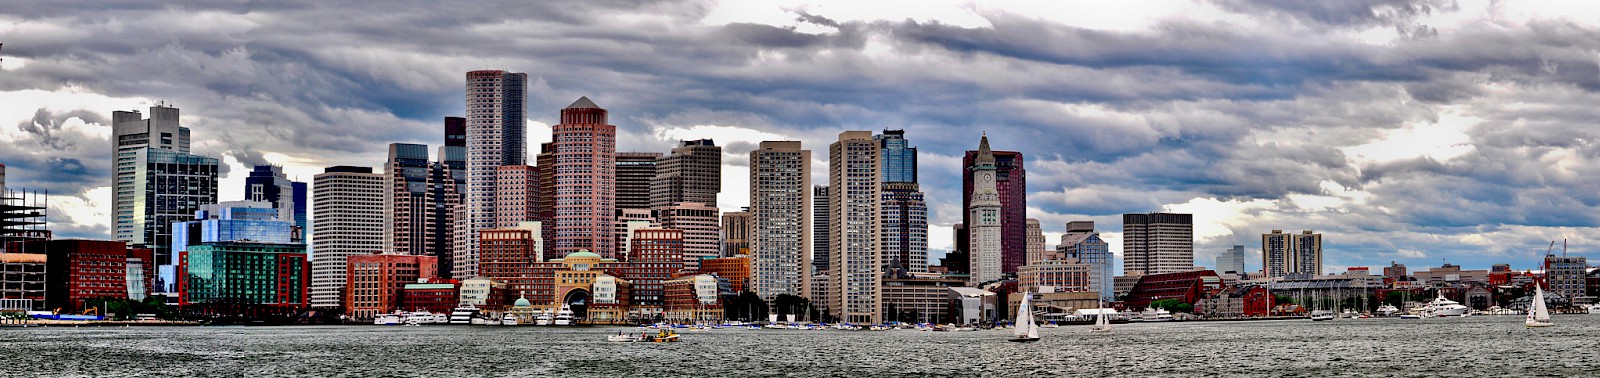 Waterfront, Boston, Massachusetts, Photo by Peter Glenday at [Flickr](https://flic.kr/p/cpb66u)